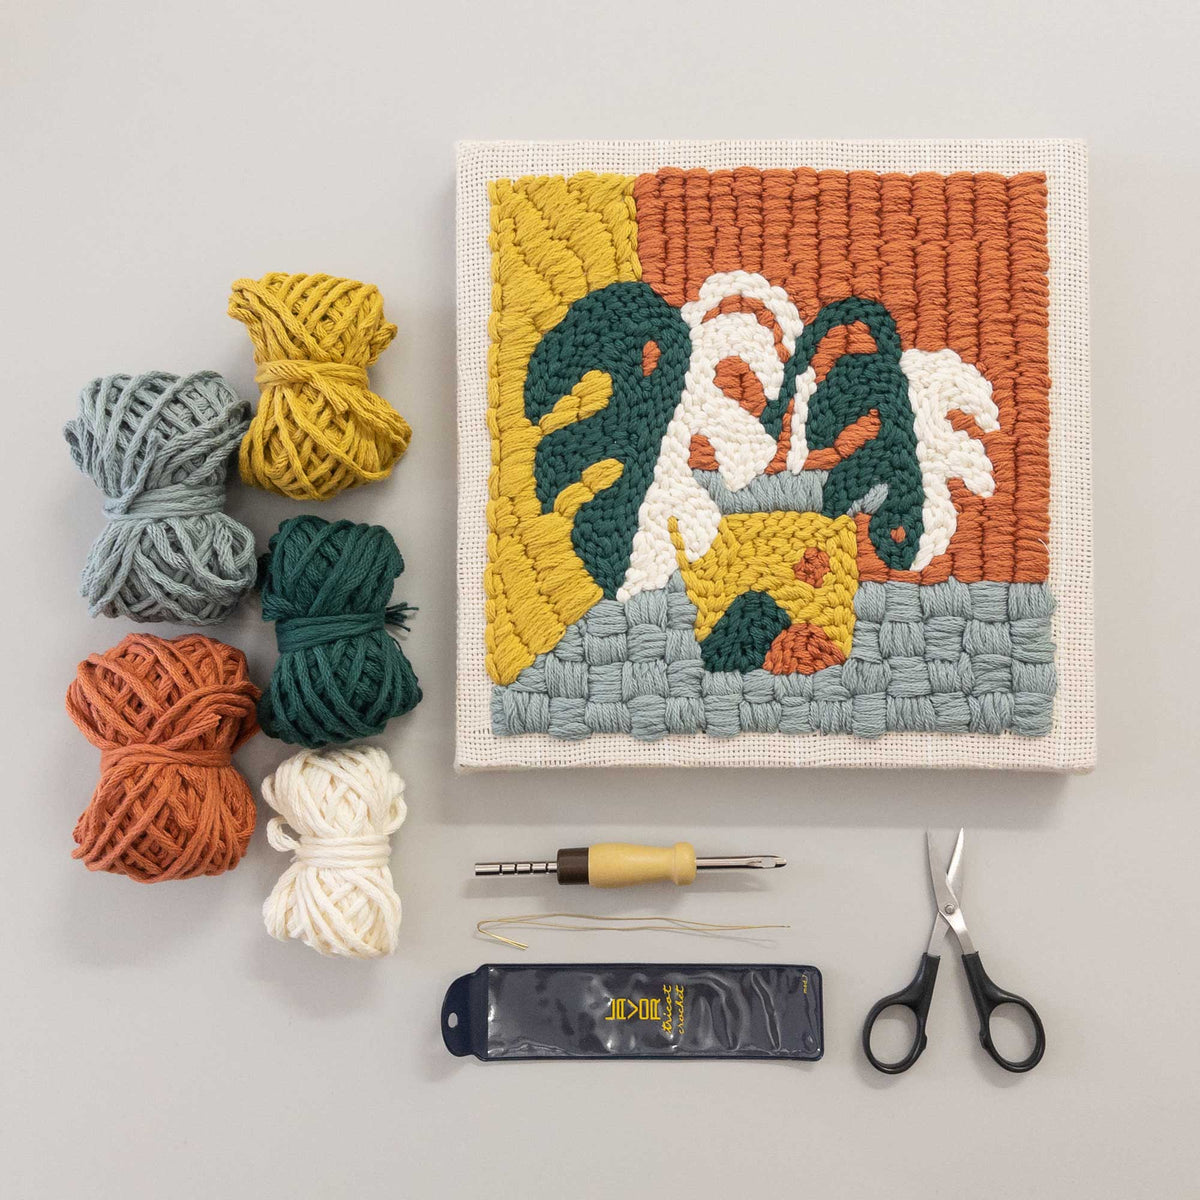 Punch Needle Kit - Leaves and Orange Sun – Figured'Art